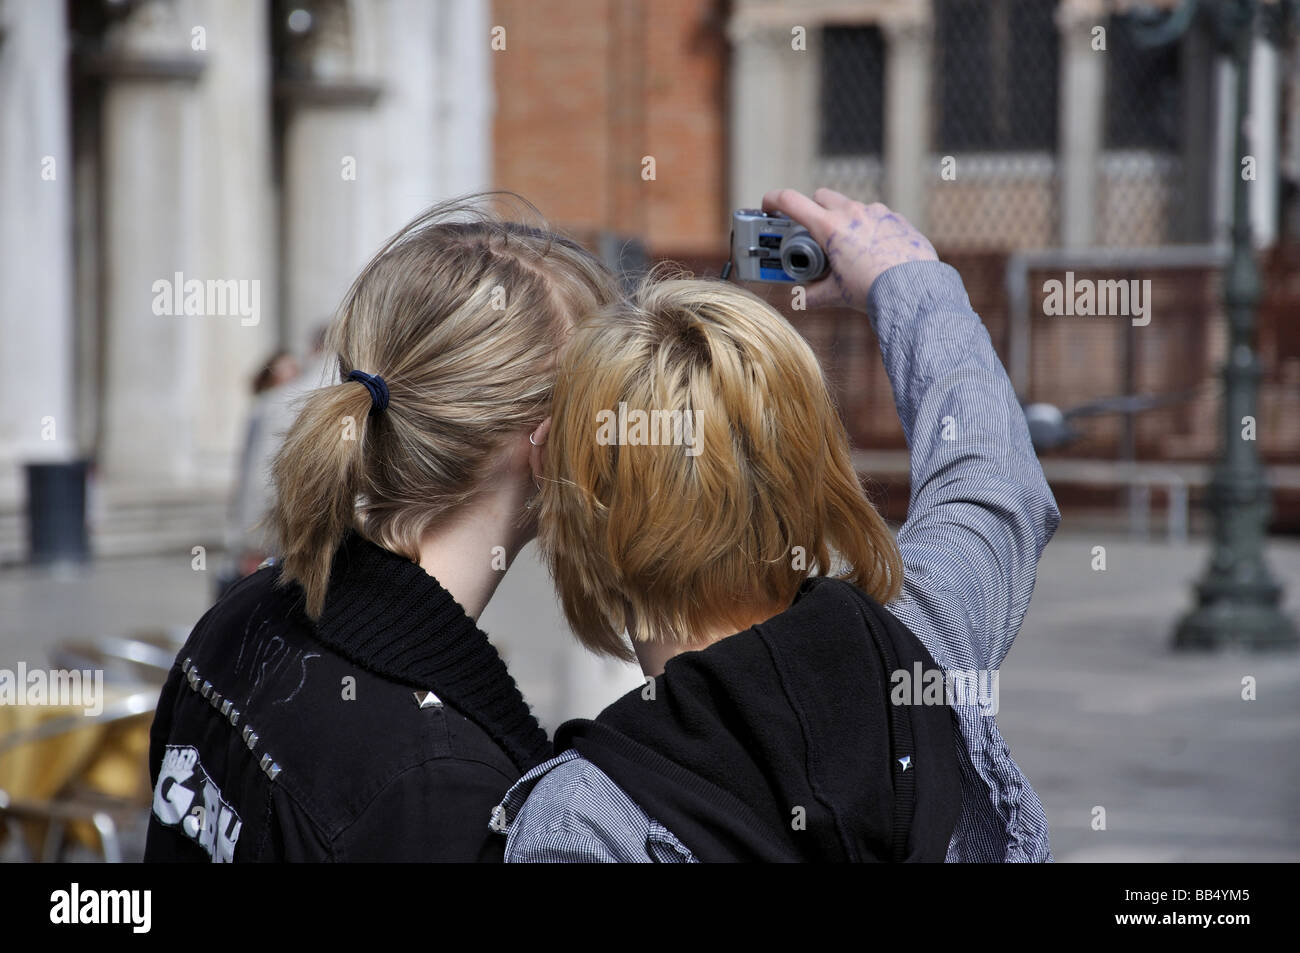 Girls taking photos of themselves, St Mark's Square, Venice, Venice Province, Veneto Region, Italy Stock Photo